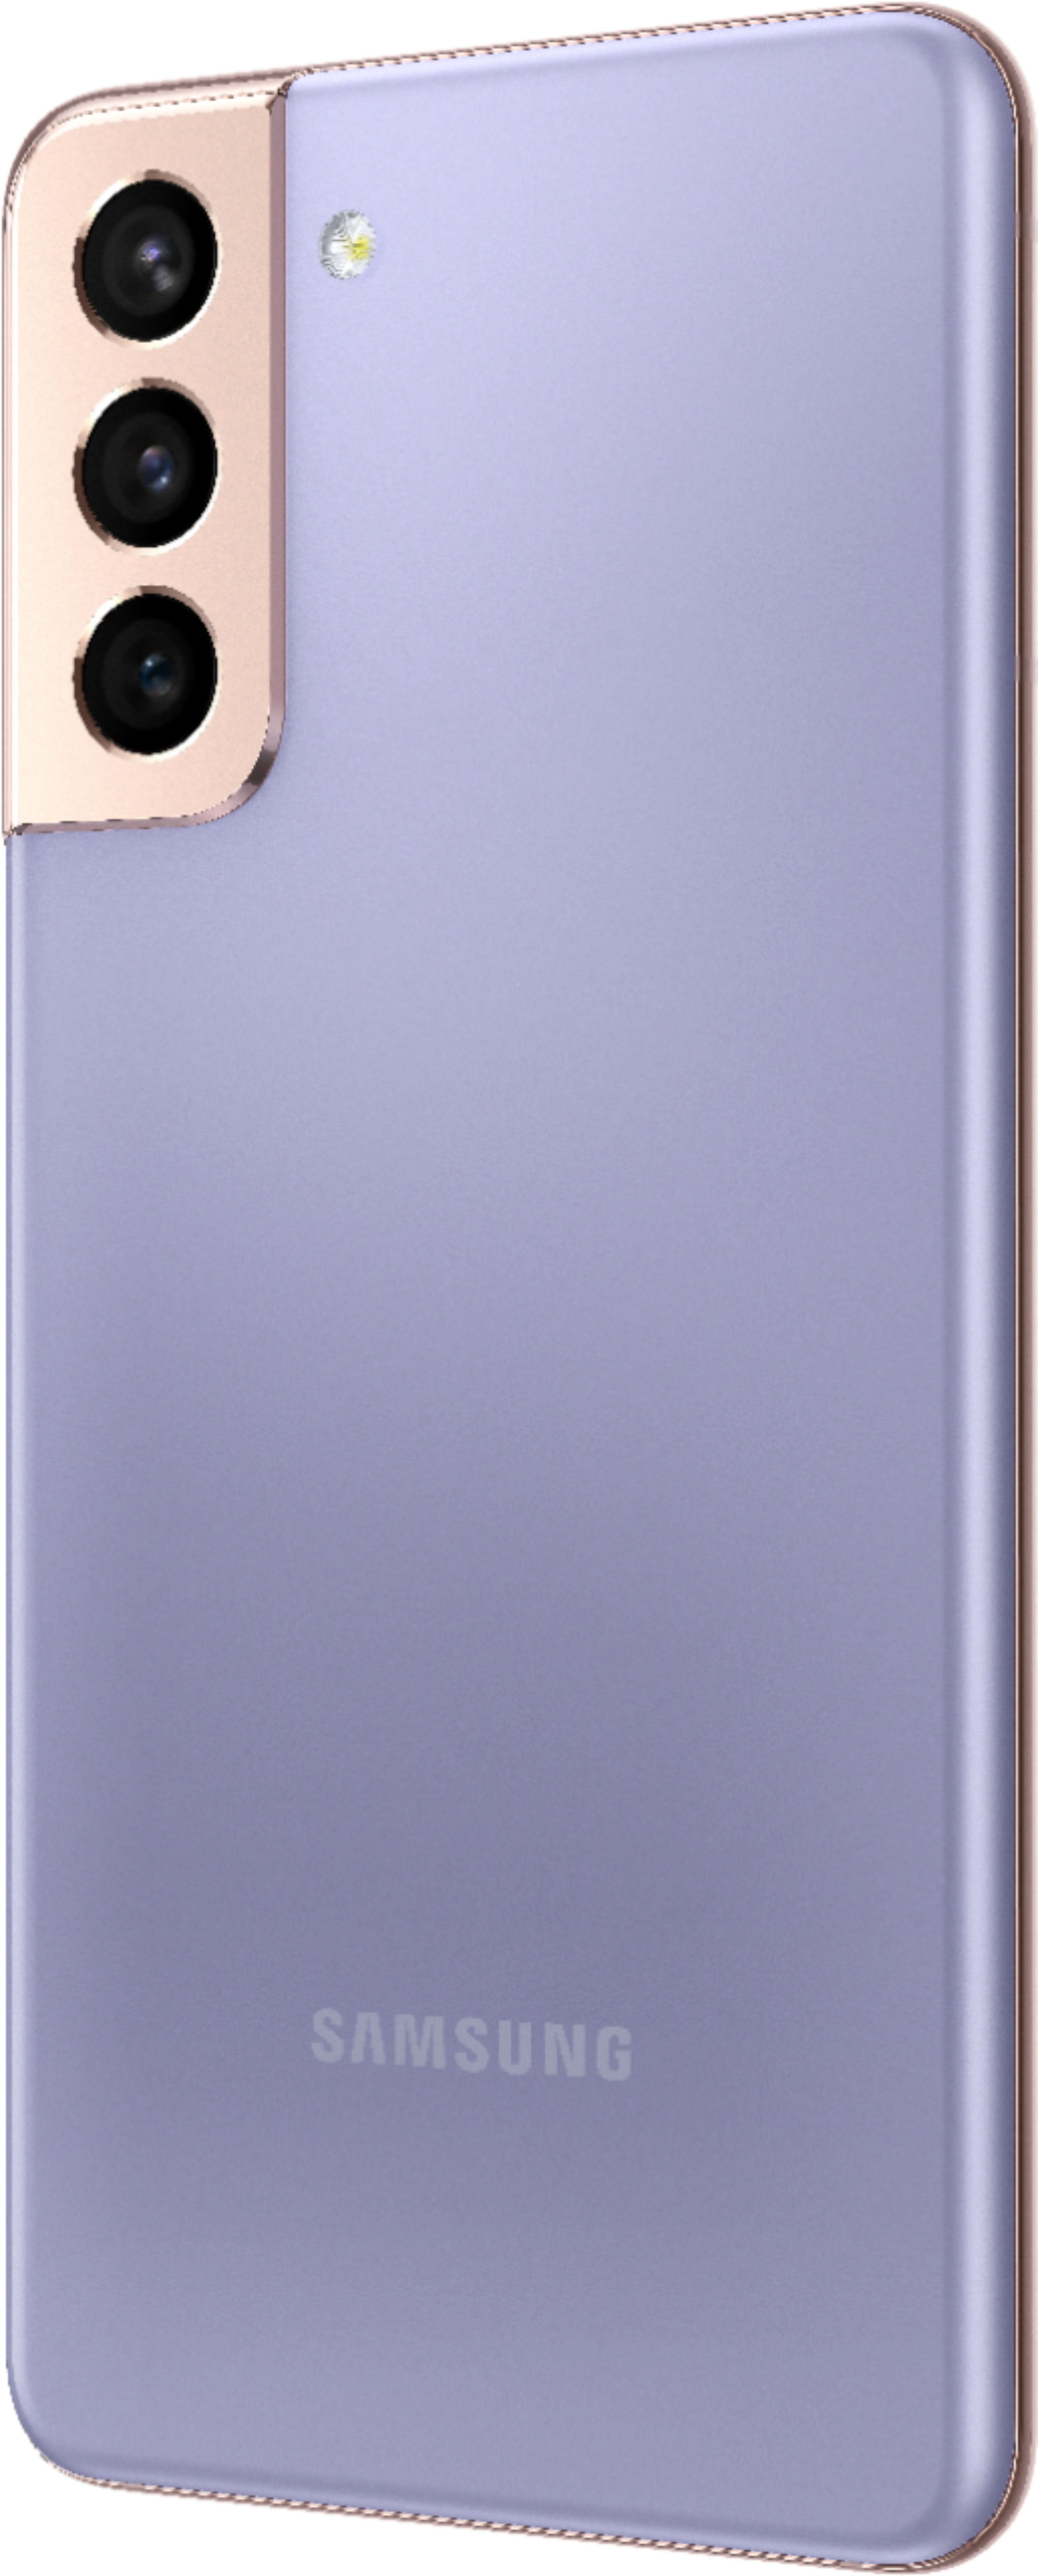 Samsung Galaxy S21 5G SM-G991U - 128GB - Phantom Gray (Unlocked) for sale  online